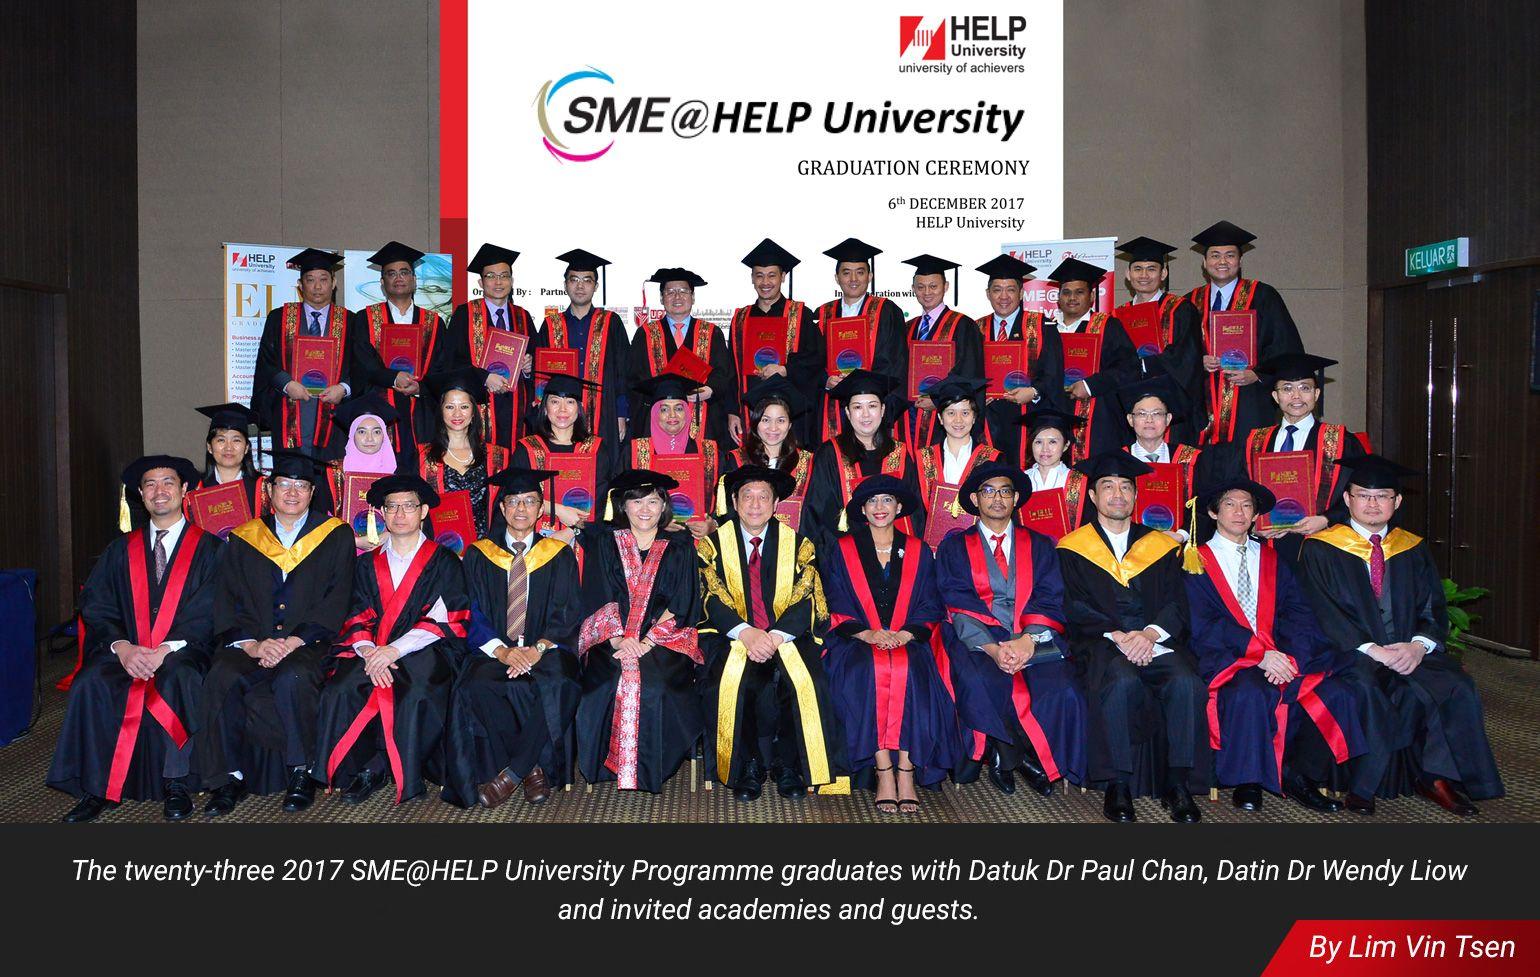 Help University Logo - Graduation Ceremony of SME@HELP University